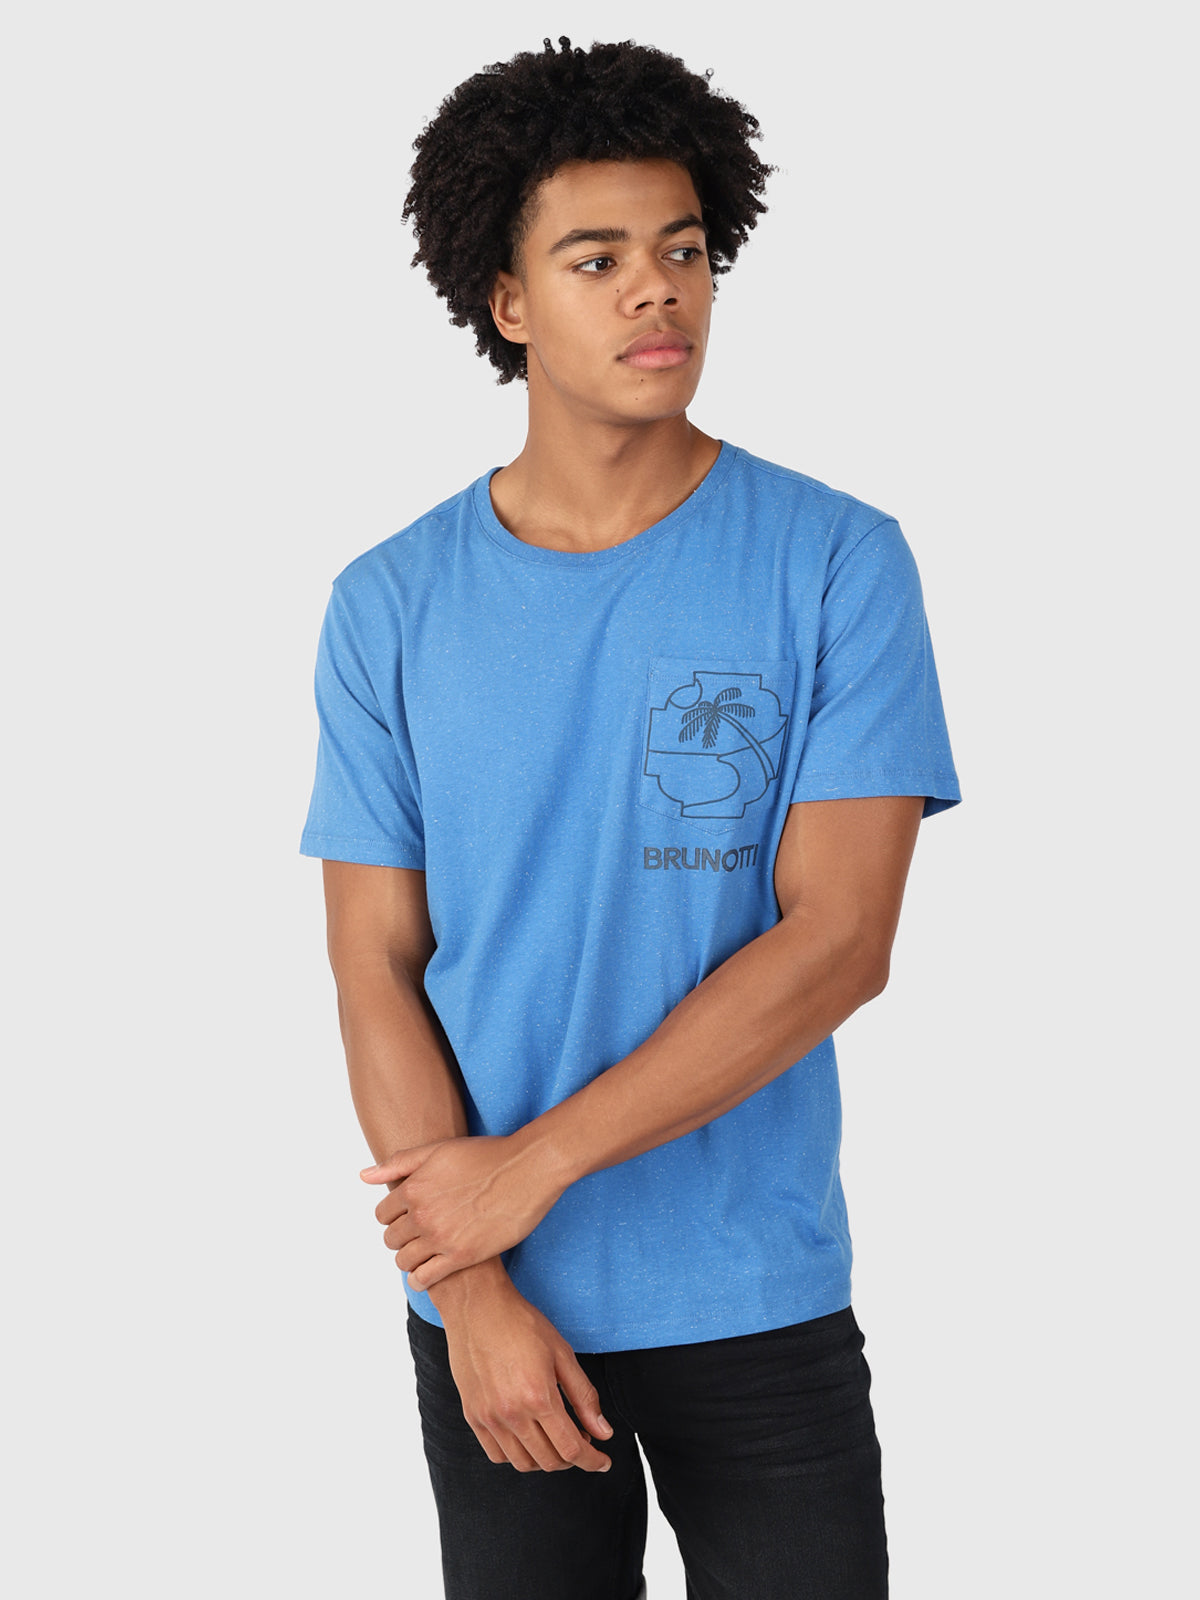 Axle-Neppy Herren T-shirt | Blau